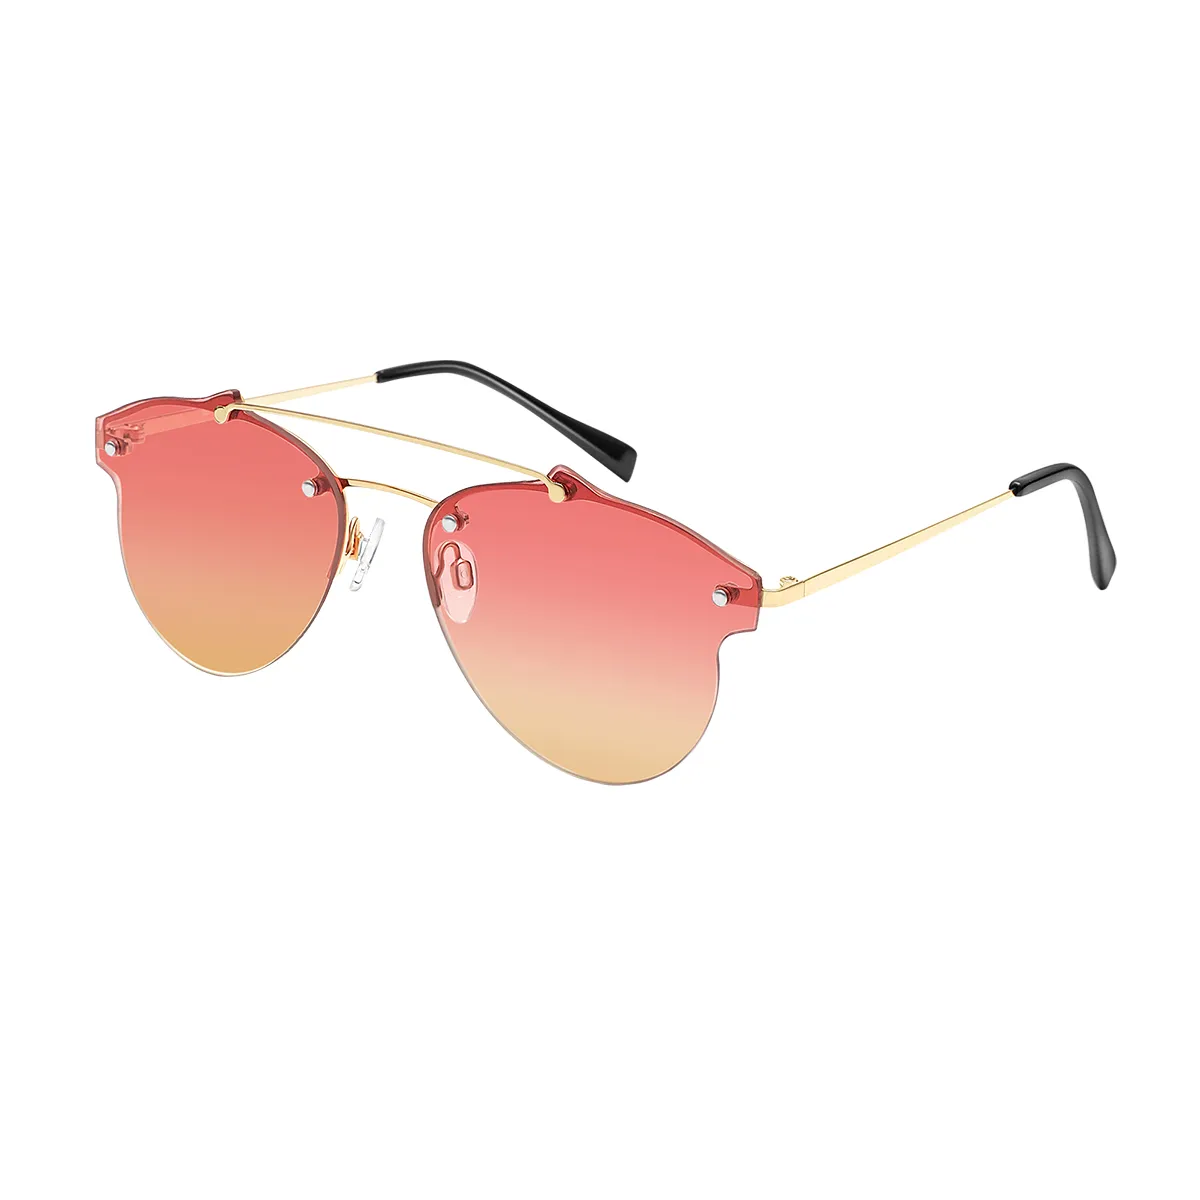 Hendrix - Aviator Gold Sunglasses for Women